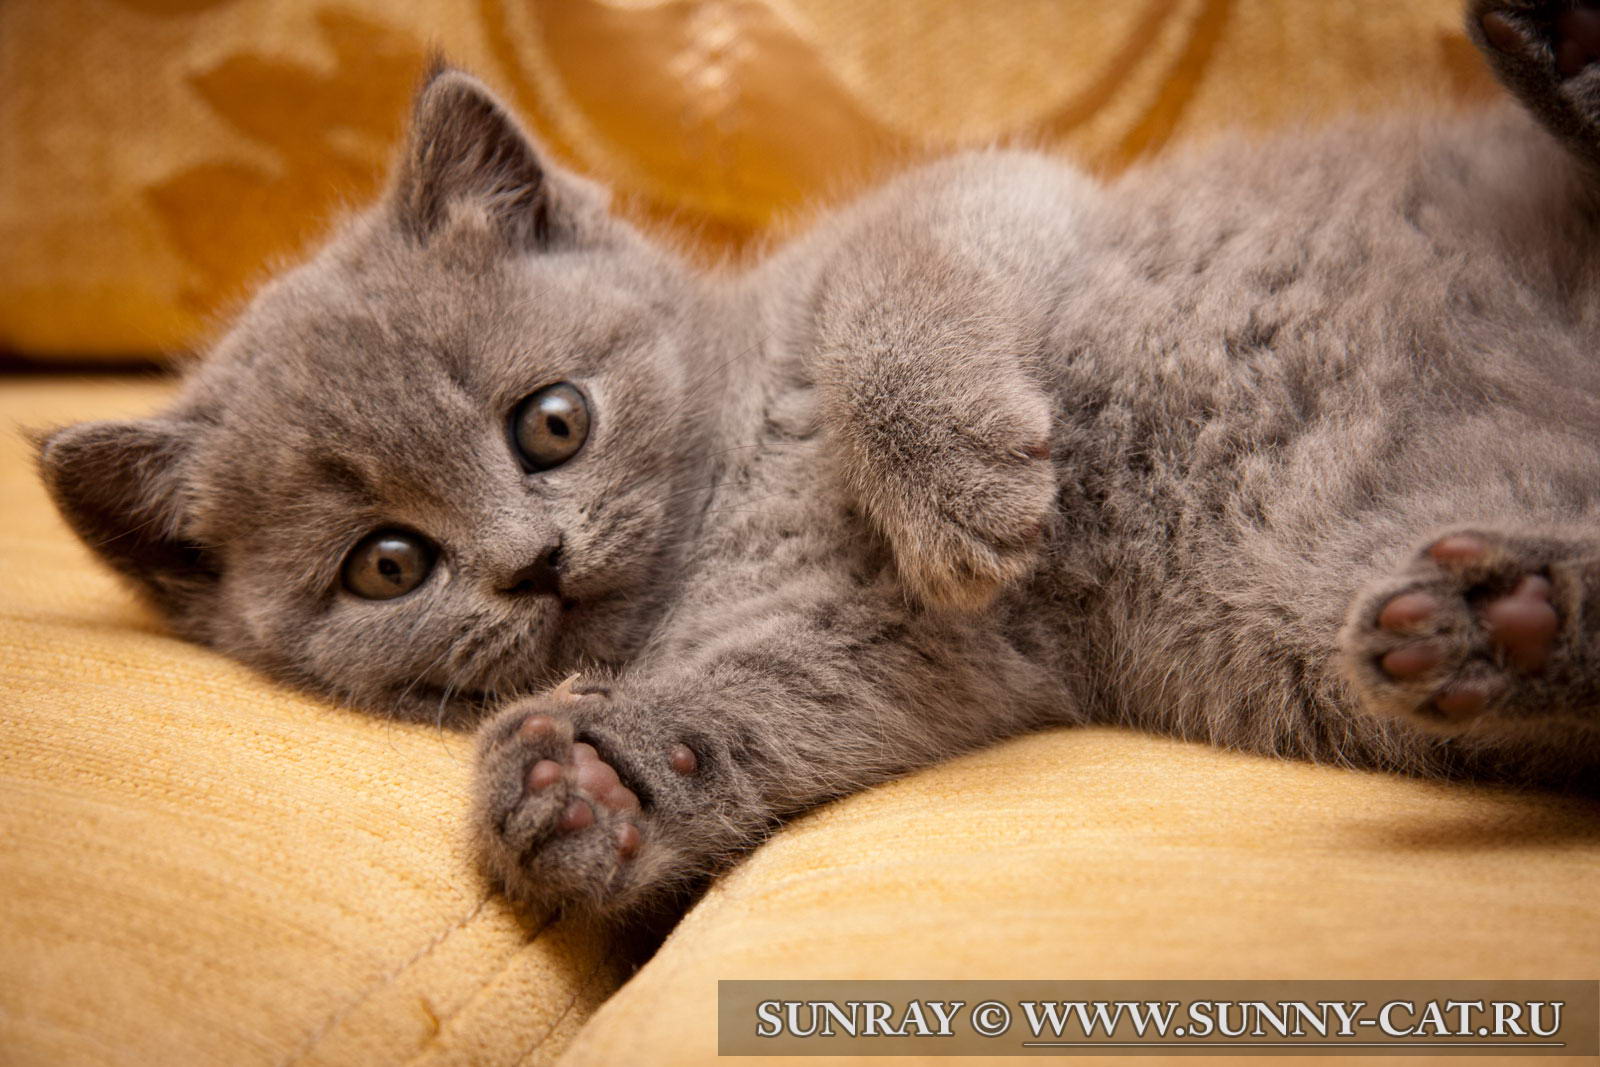 http://www.sunny-cat.ru/datas/users/1-britanskij_kotenok_dominic_sunray_013.jpg